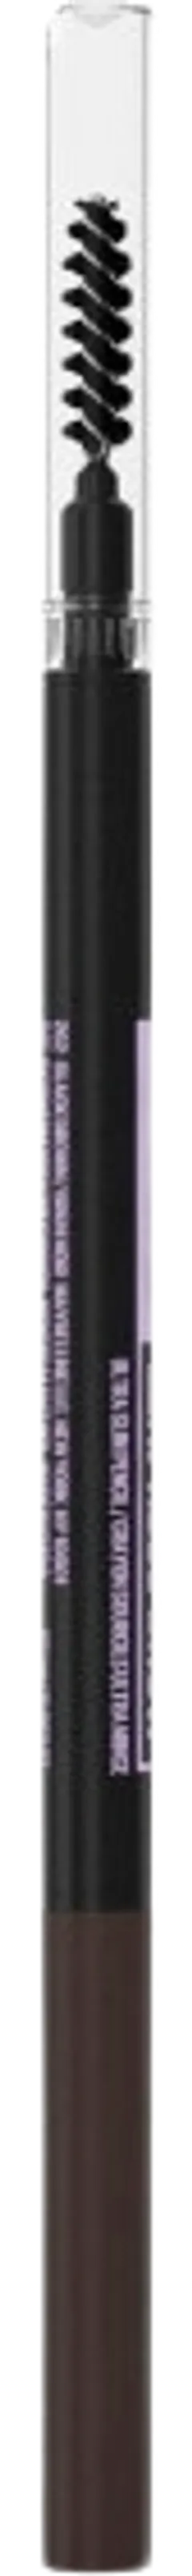 Maybelline New York Express Brow Ultra Slim 06 Black brown -kulmakynä 0,84g - 3